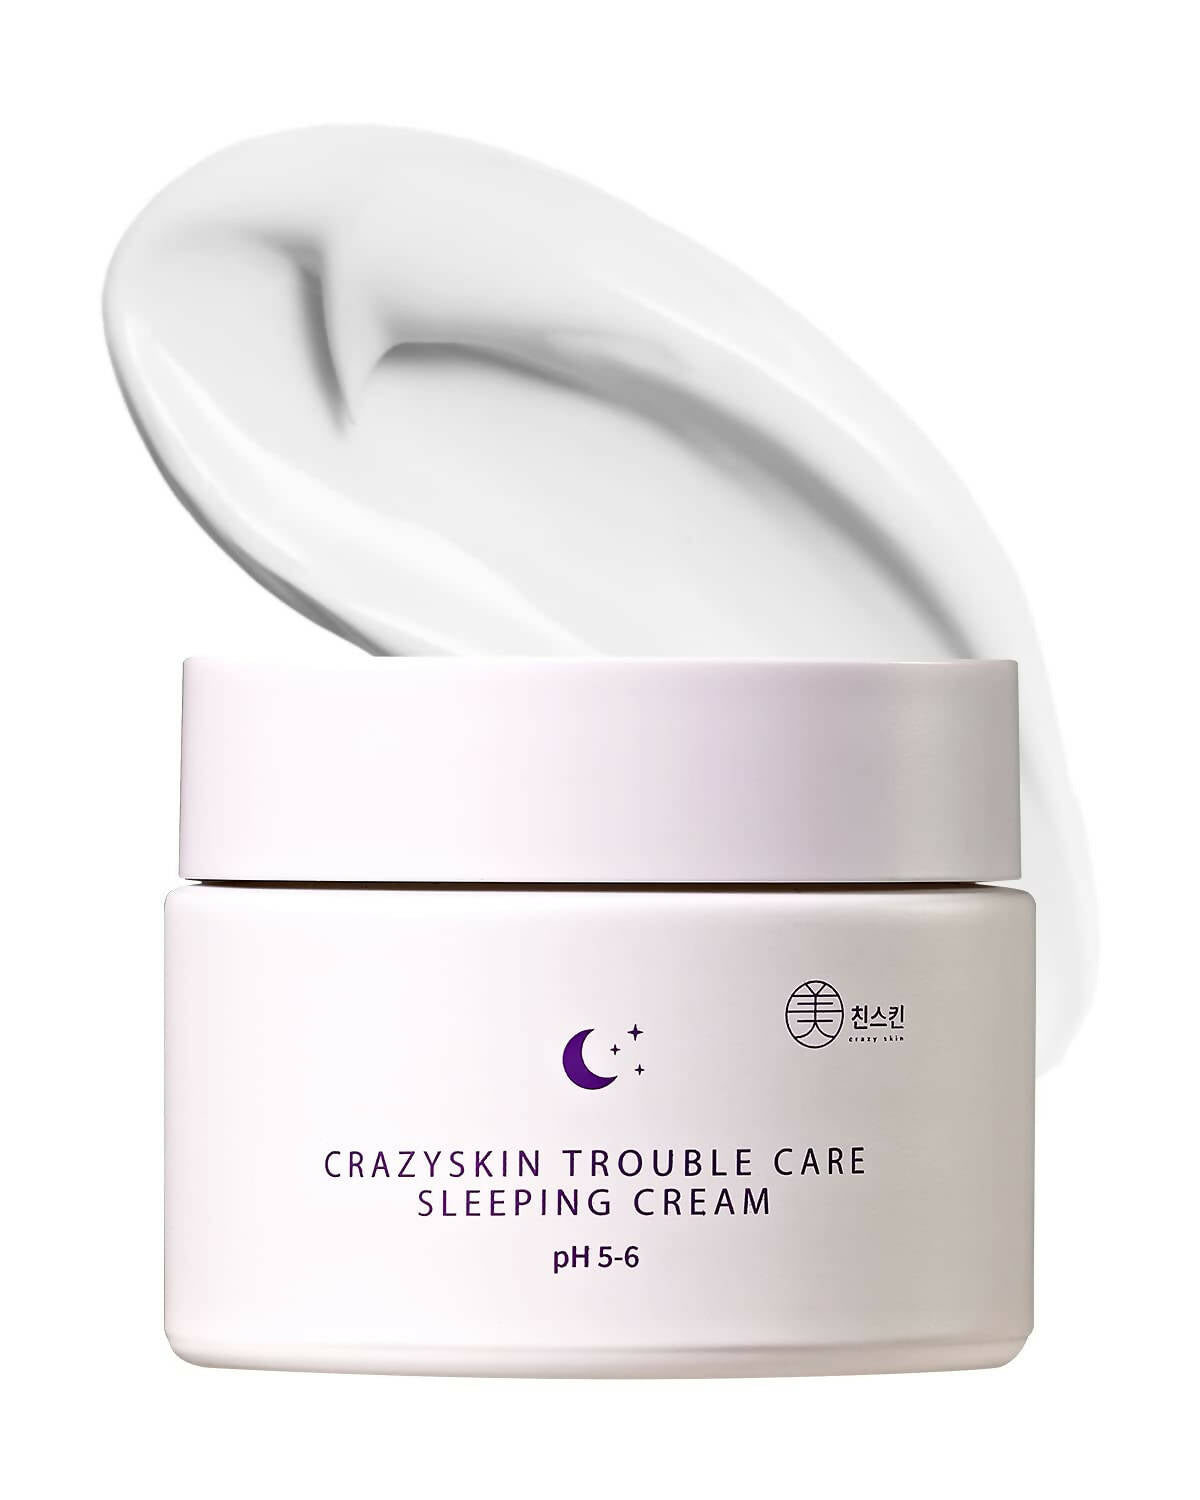 CRAZY SKIN Skin Repair Trouble Care Sleeping Cream 1.76oz | Deep Moisturizing pH level 5.5 overnight cream | Moisturizer for acne prone skin | Korean skin care | night mask recovery care